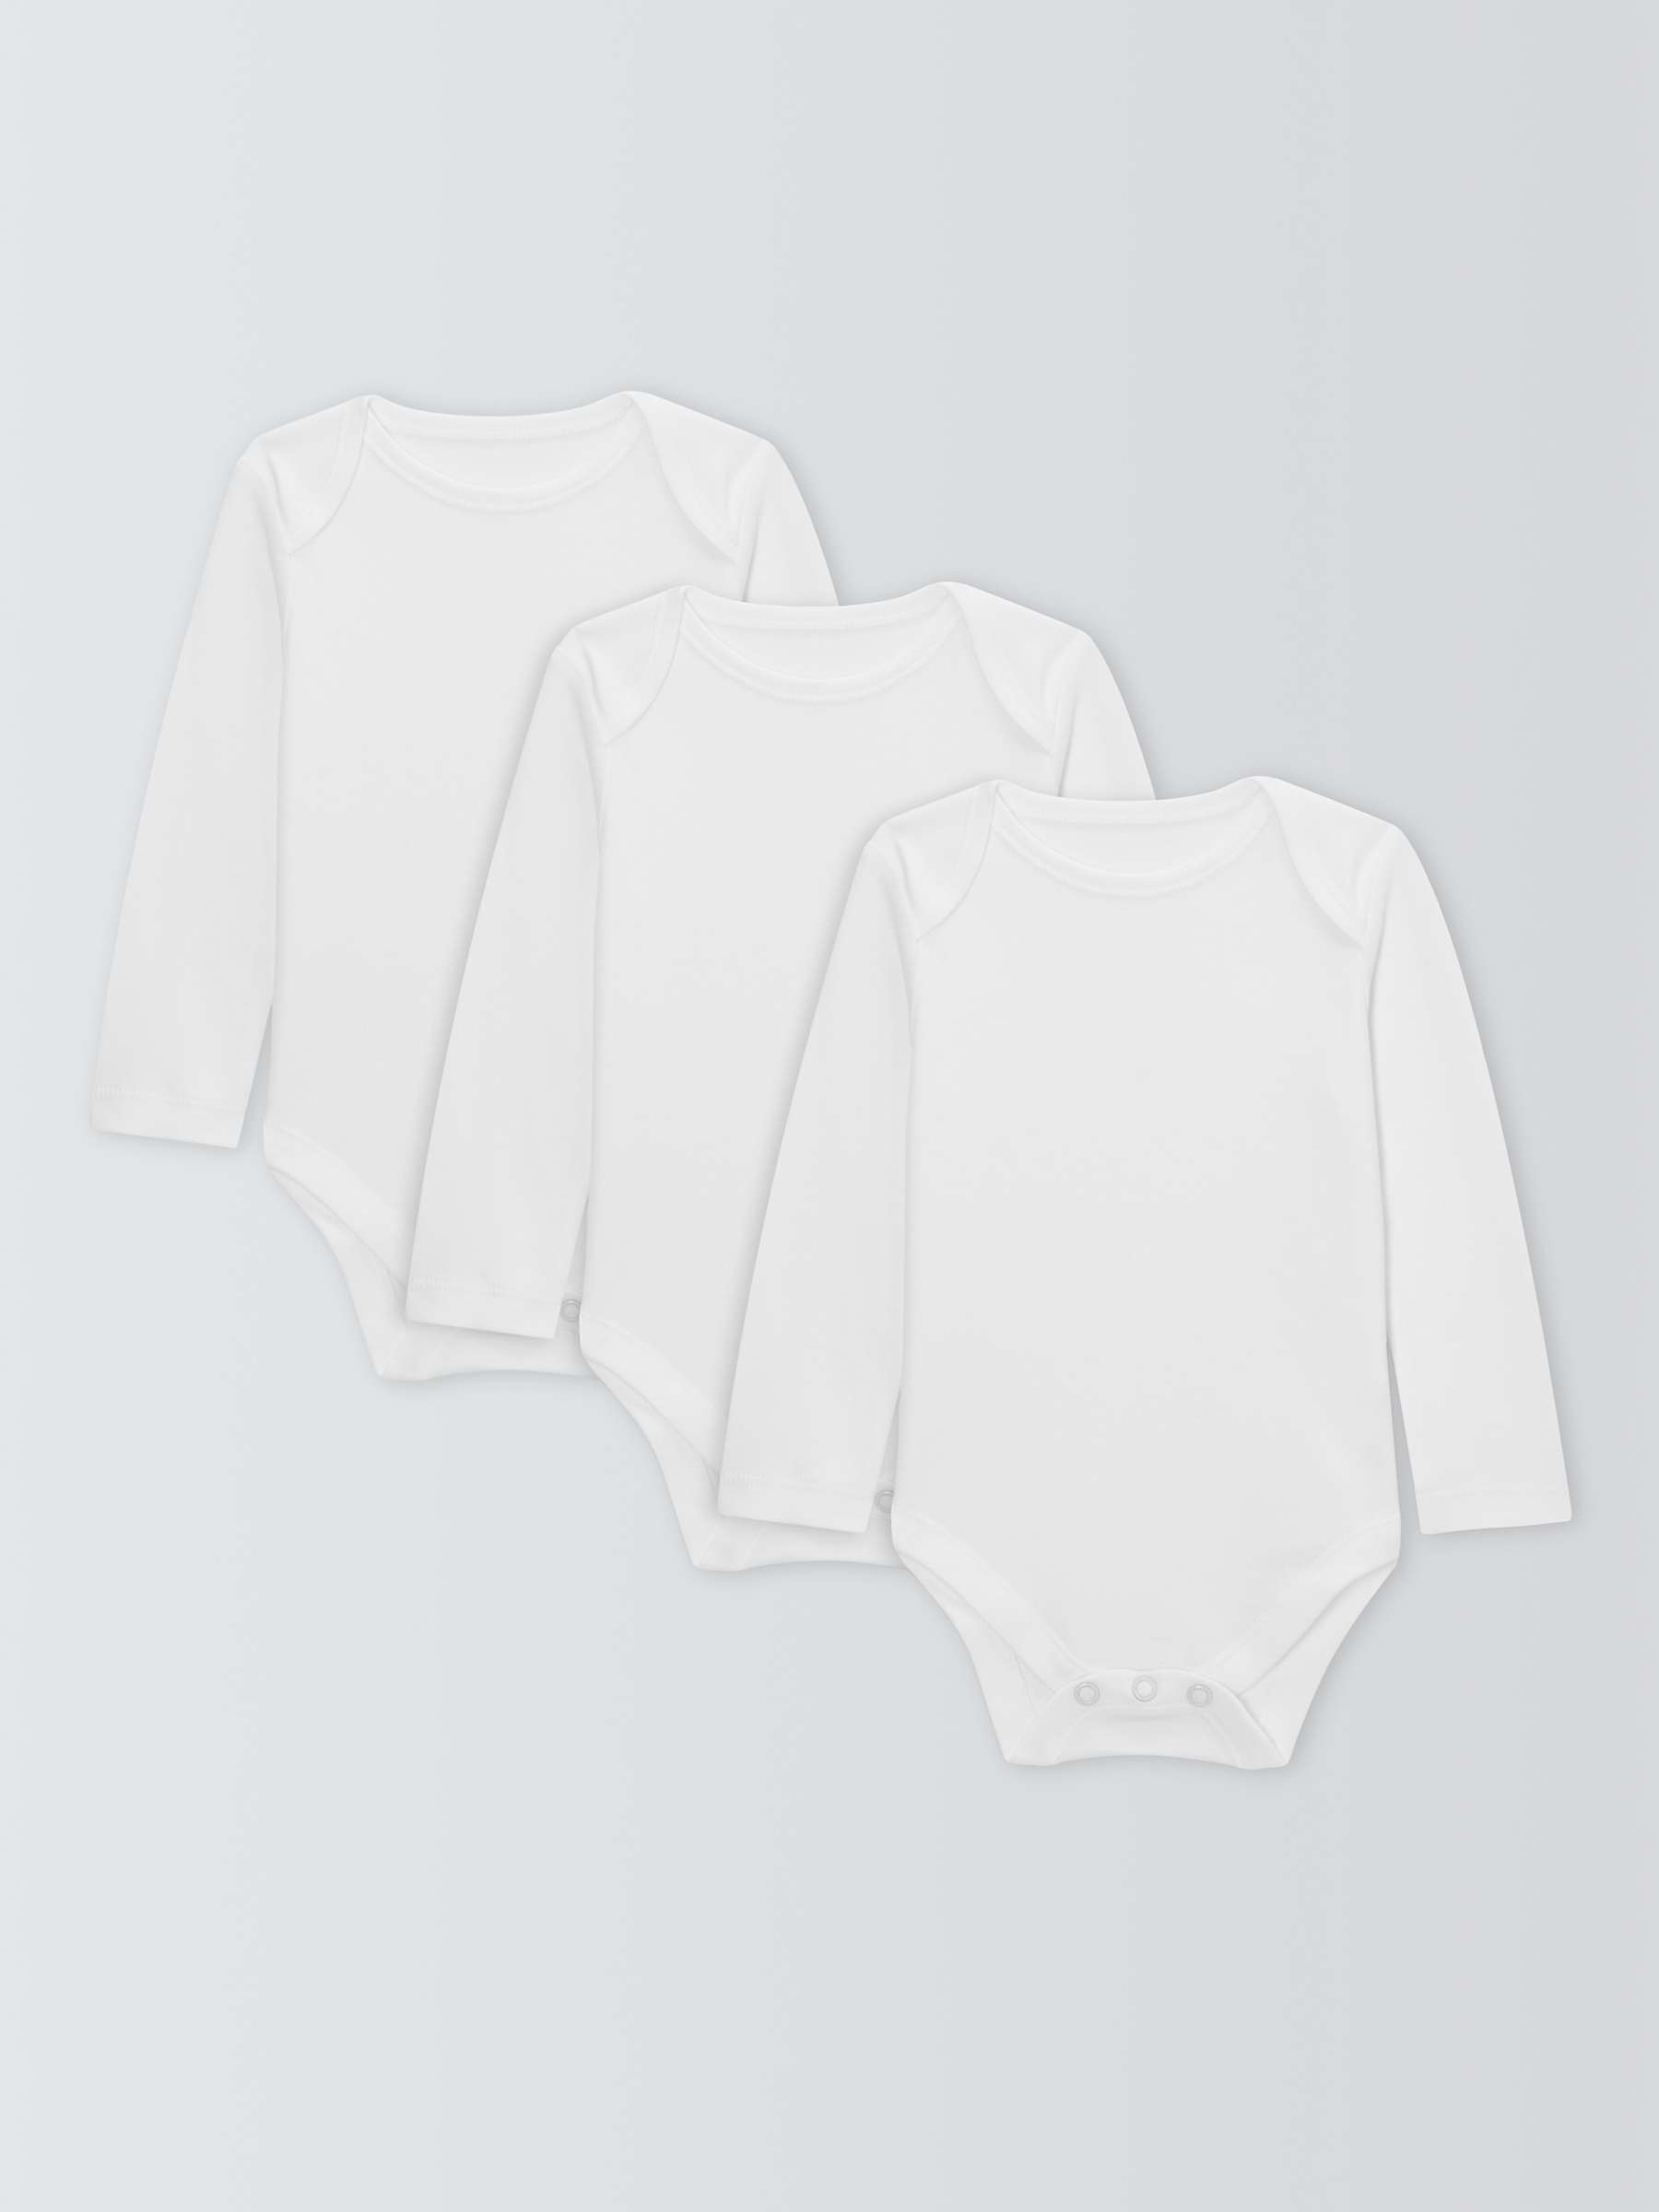 Buy John Lewis Baby Pima Cotton Long Sleeve Bodysuit, Pack of 3, White Online at johnlewis.com